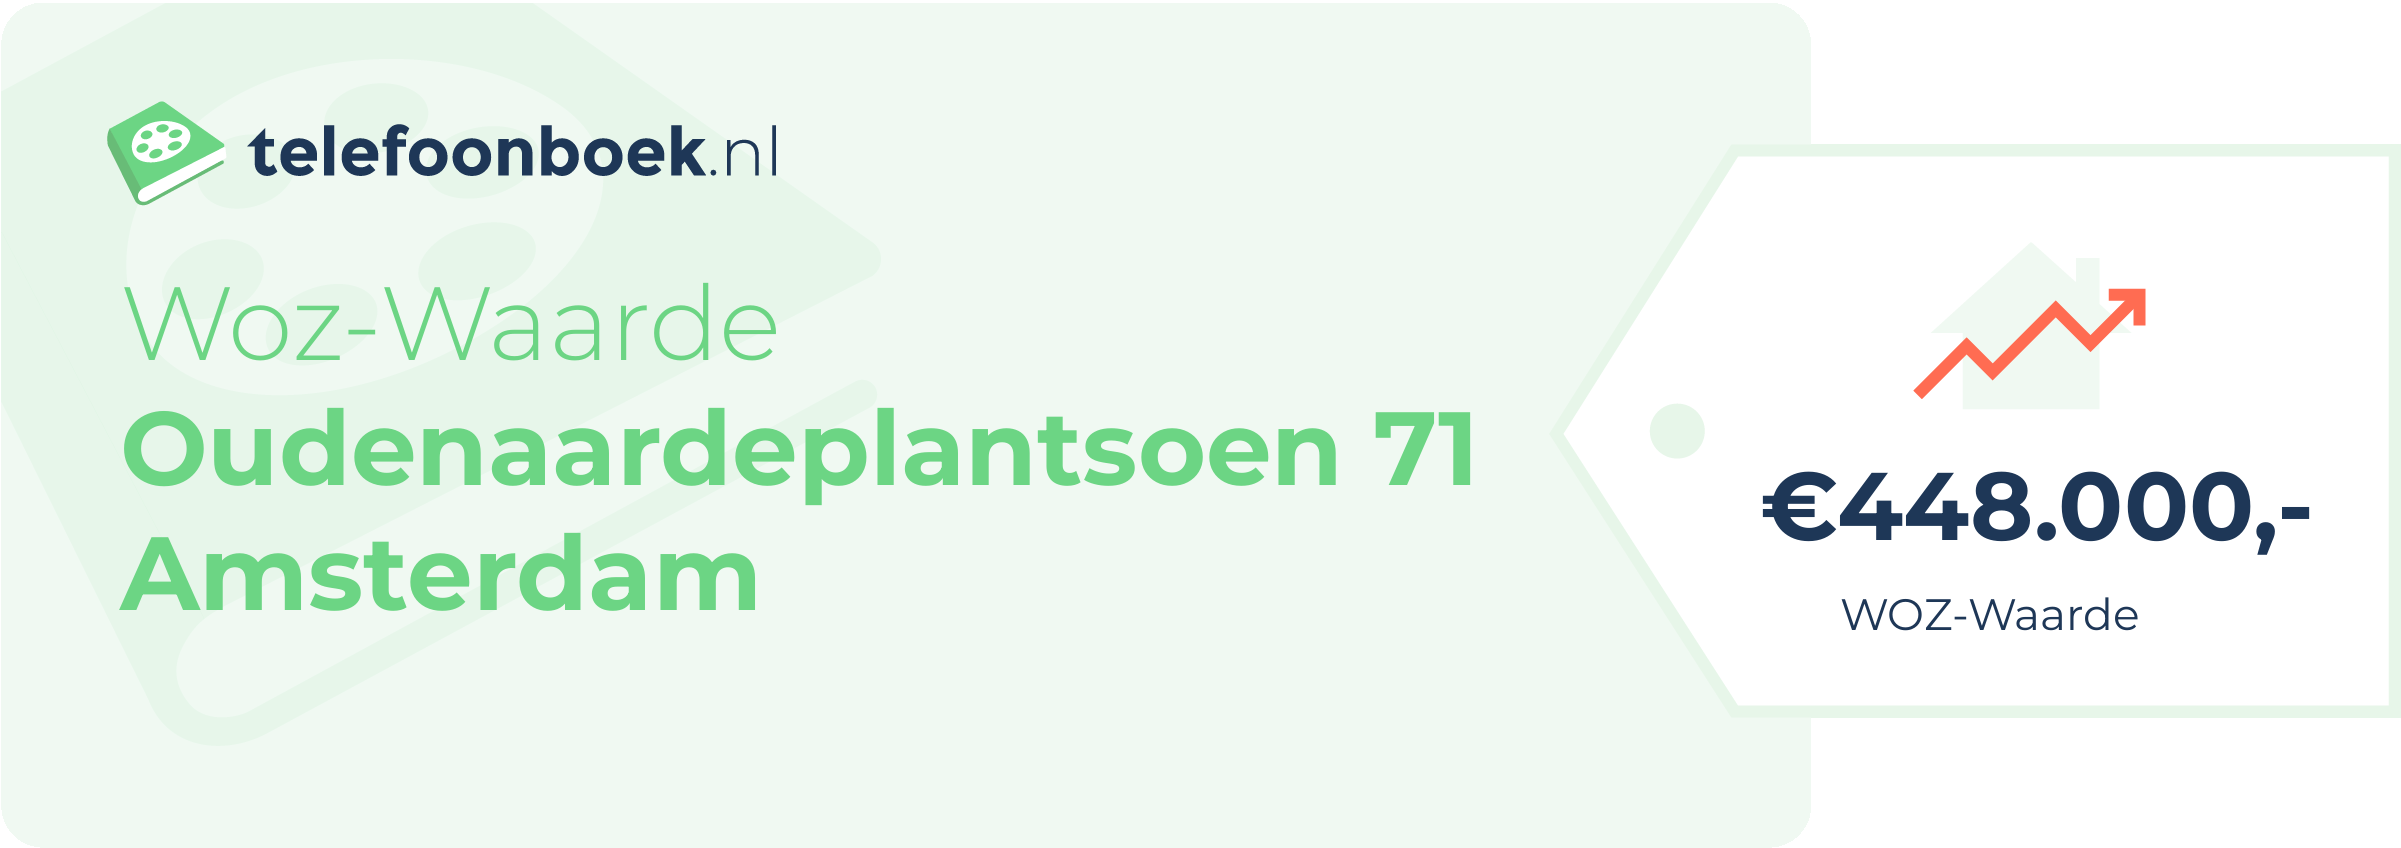 WOZ-waarde Oudenaardeplantsoen 71 Amsterdam